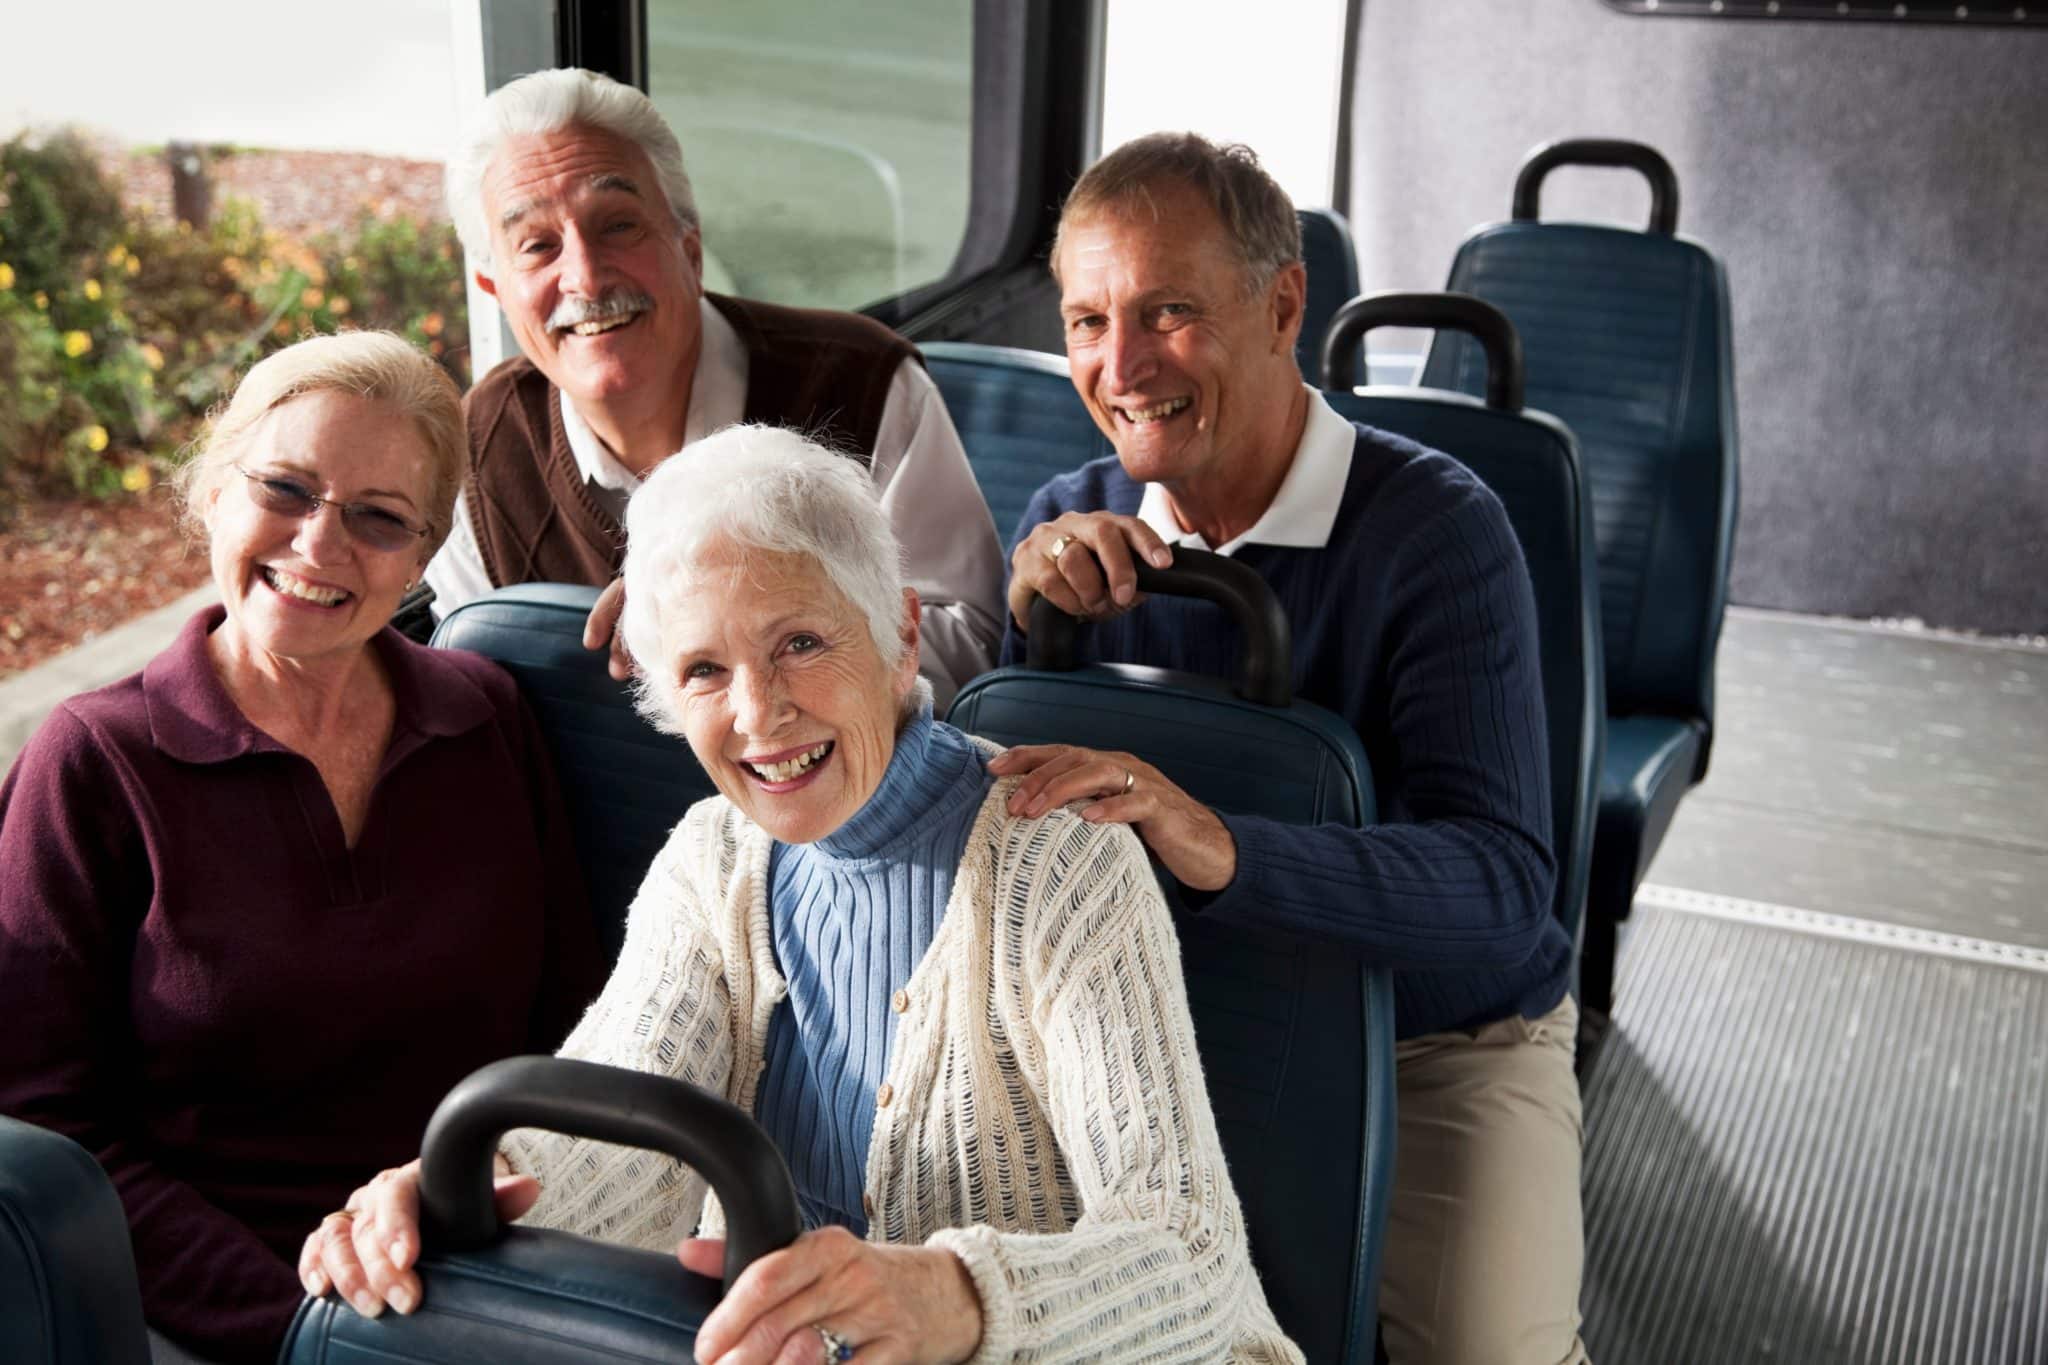 one day bus trips for seniors near pennsylvania